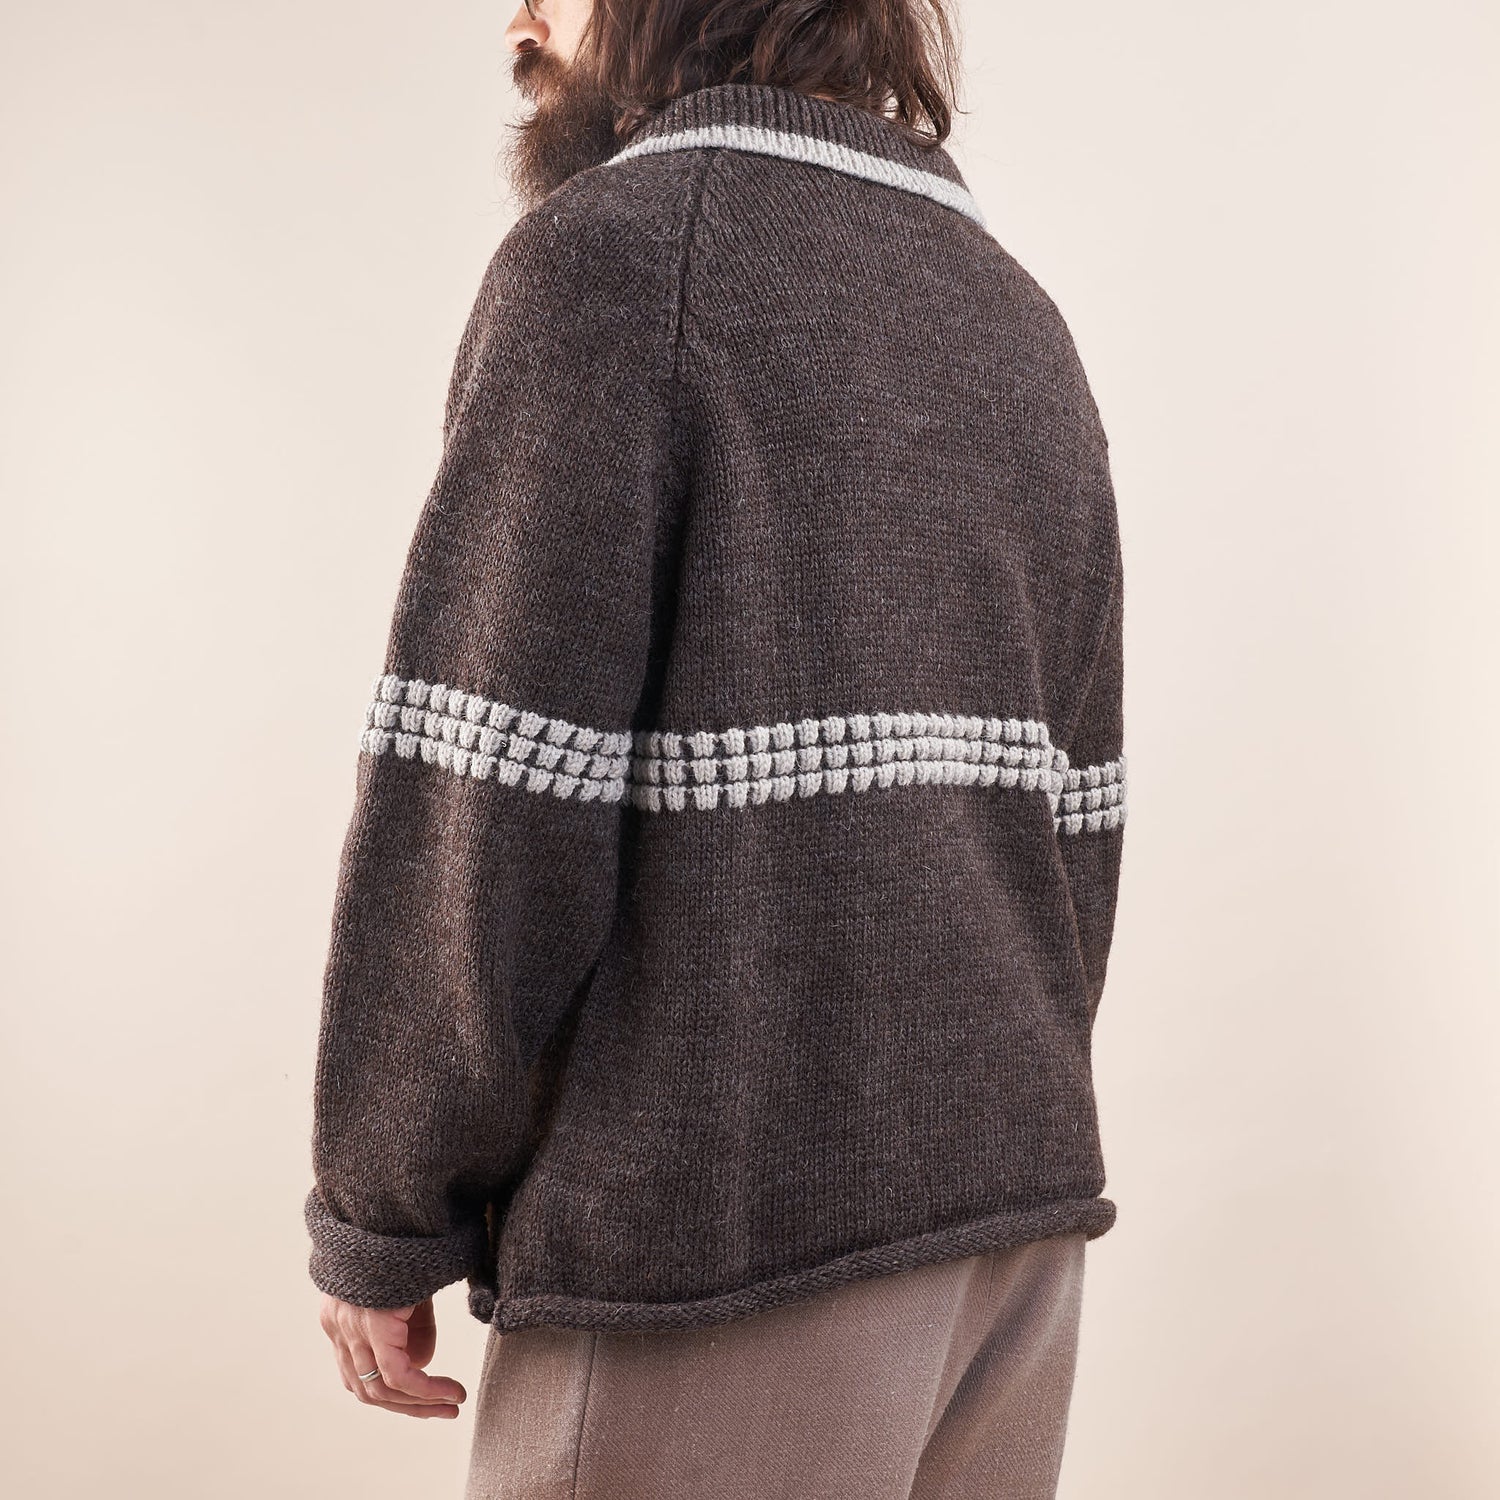 Samizdat Sweater, Undyed Two-Tone Wool